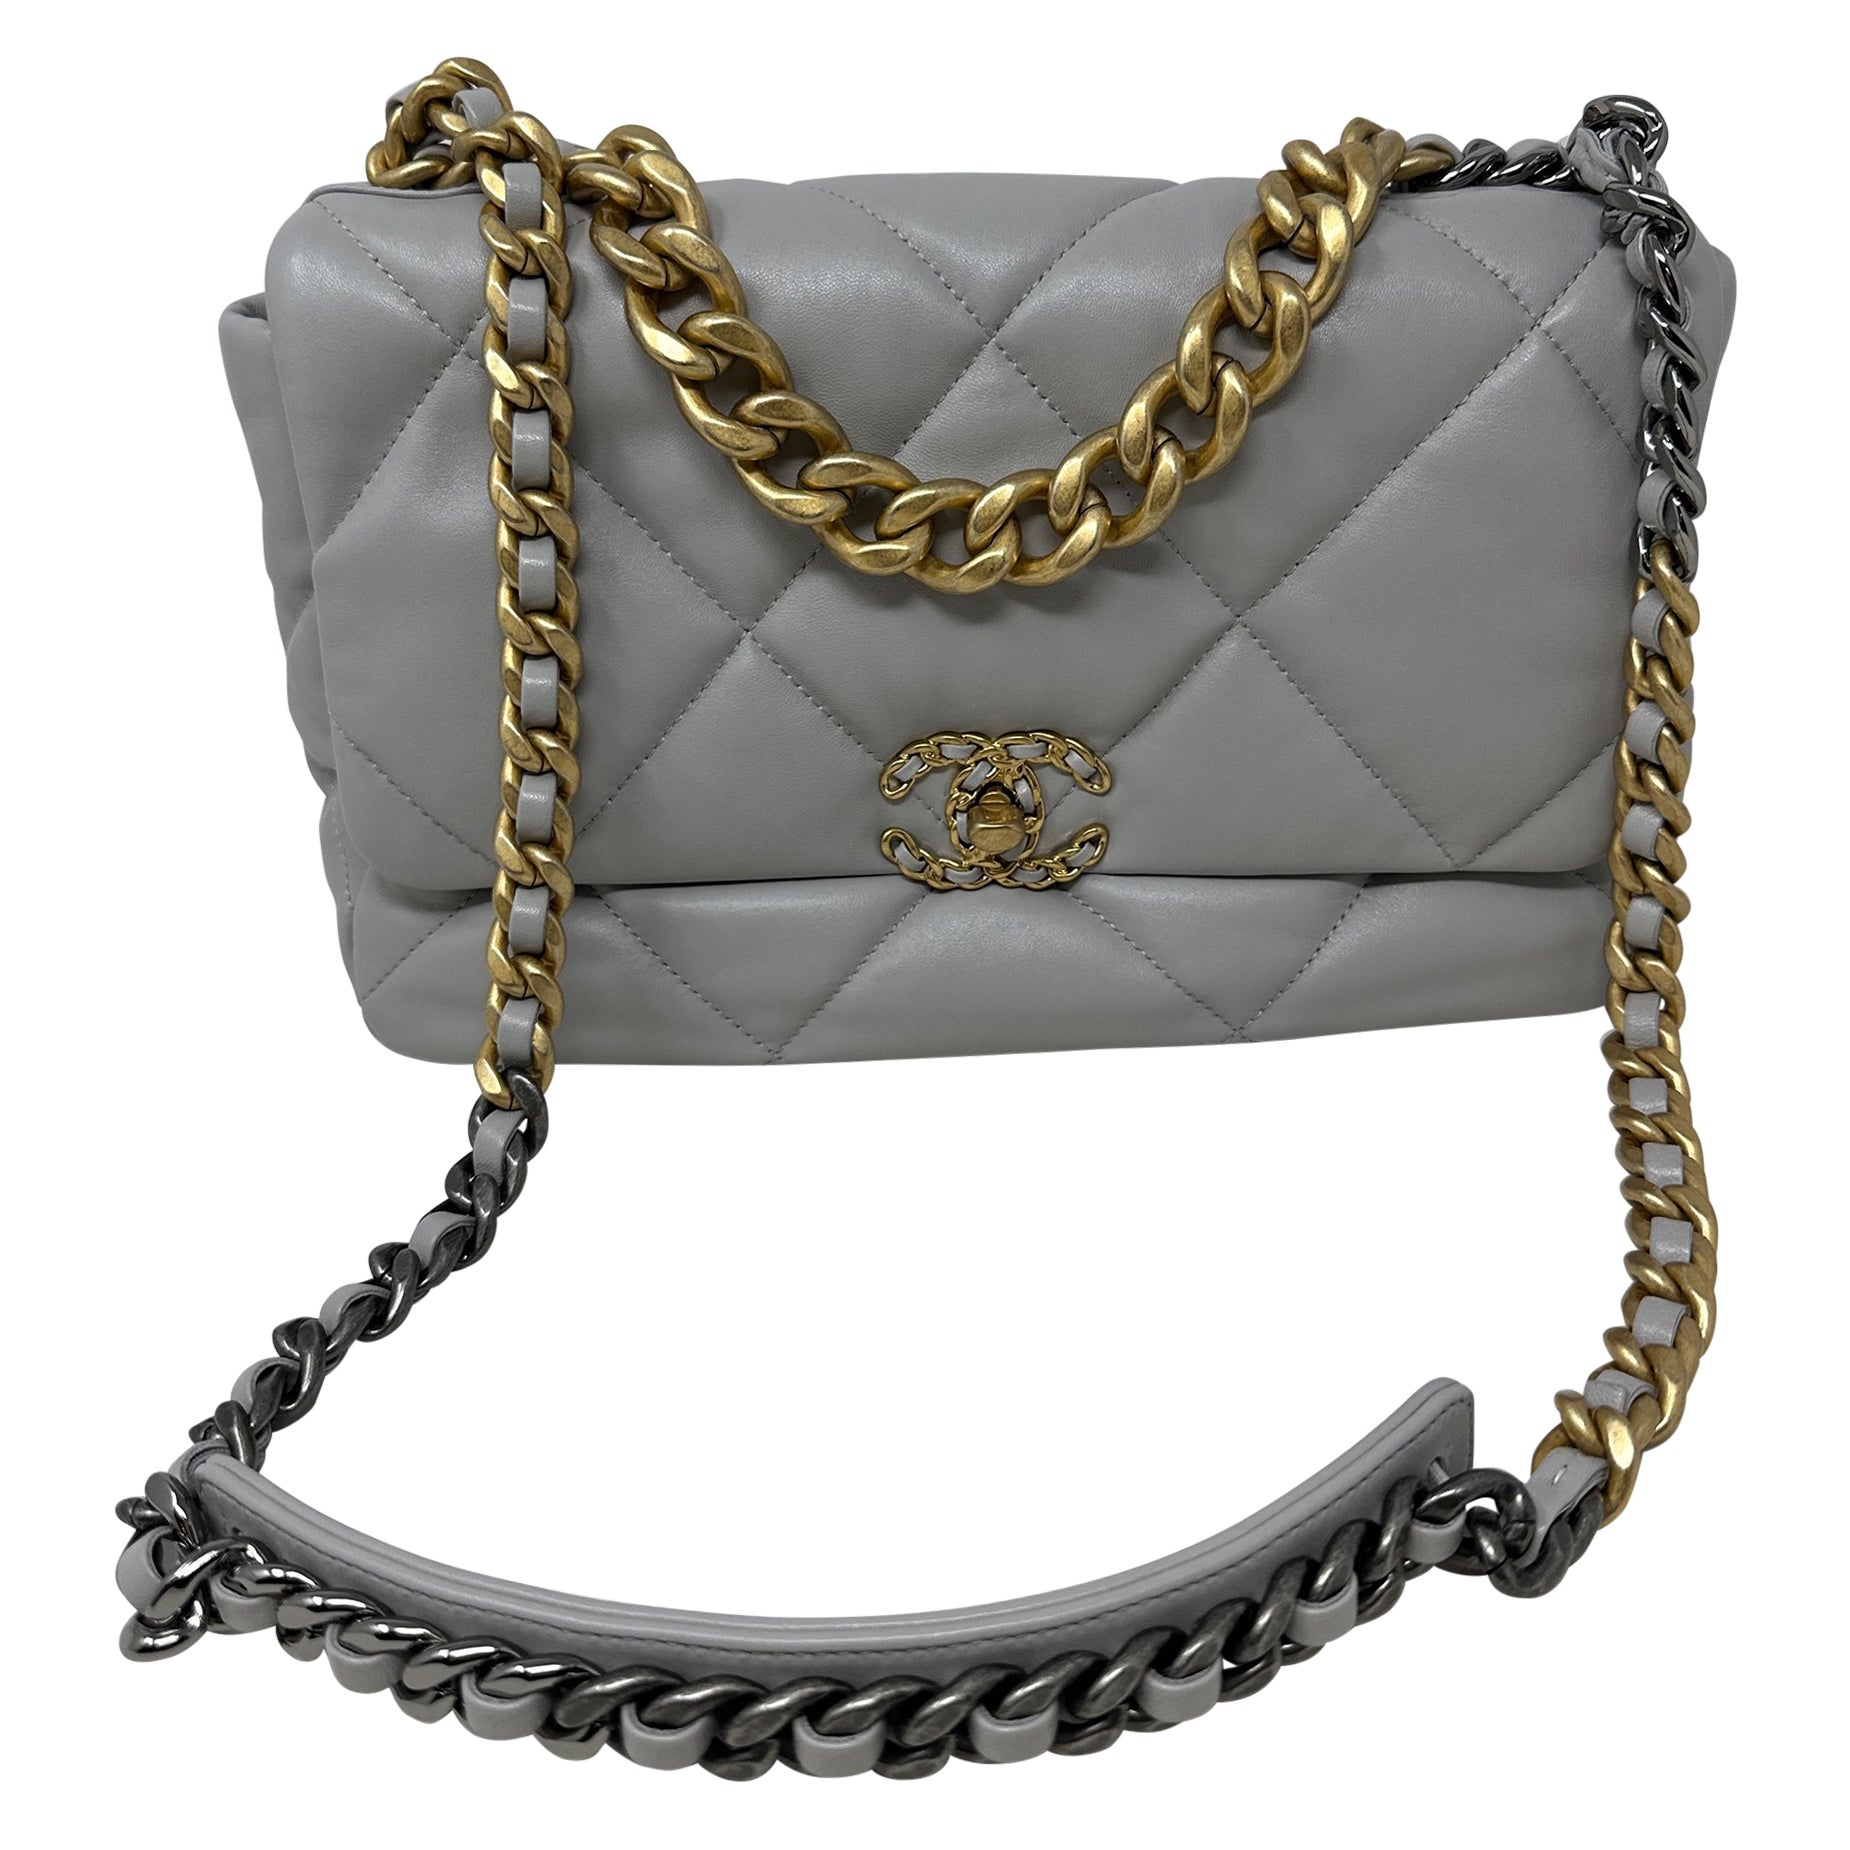 Chanel Large 2019 Grey Bag 